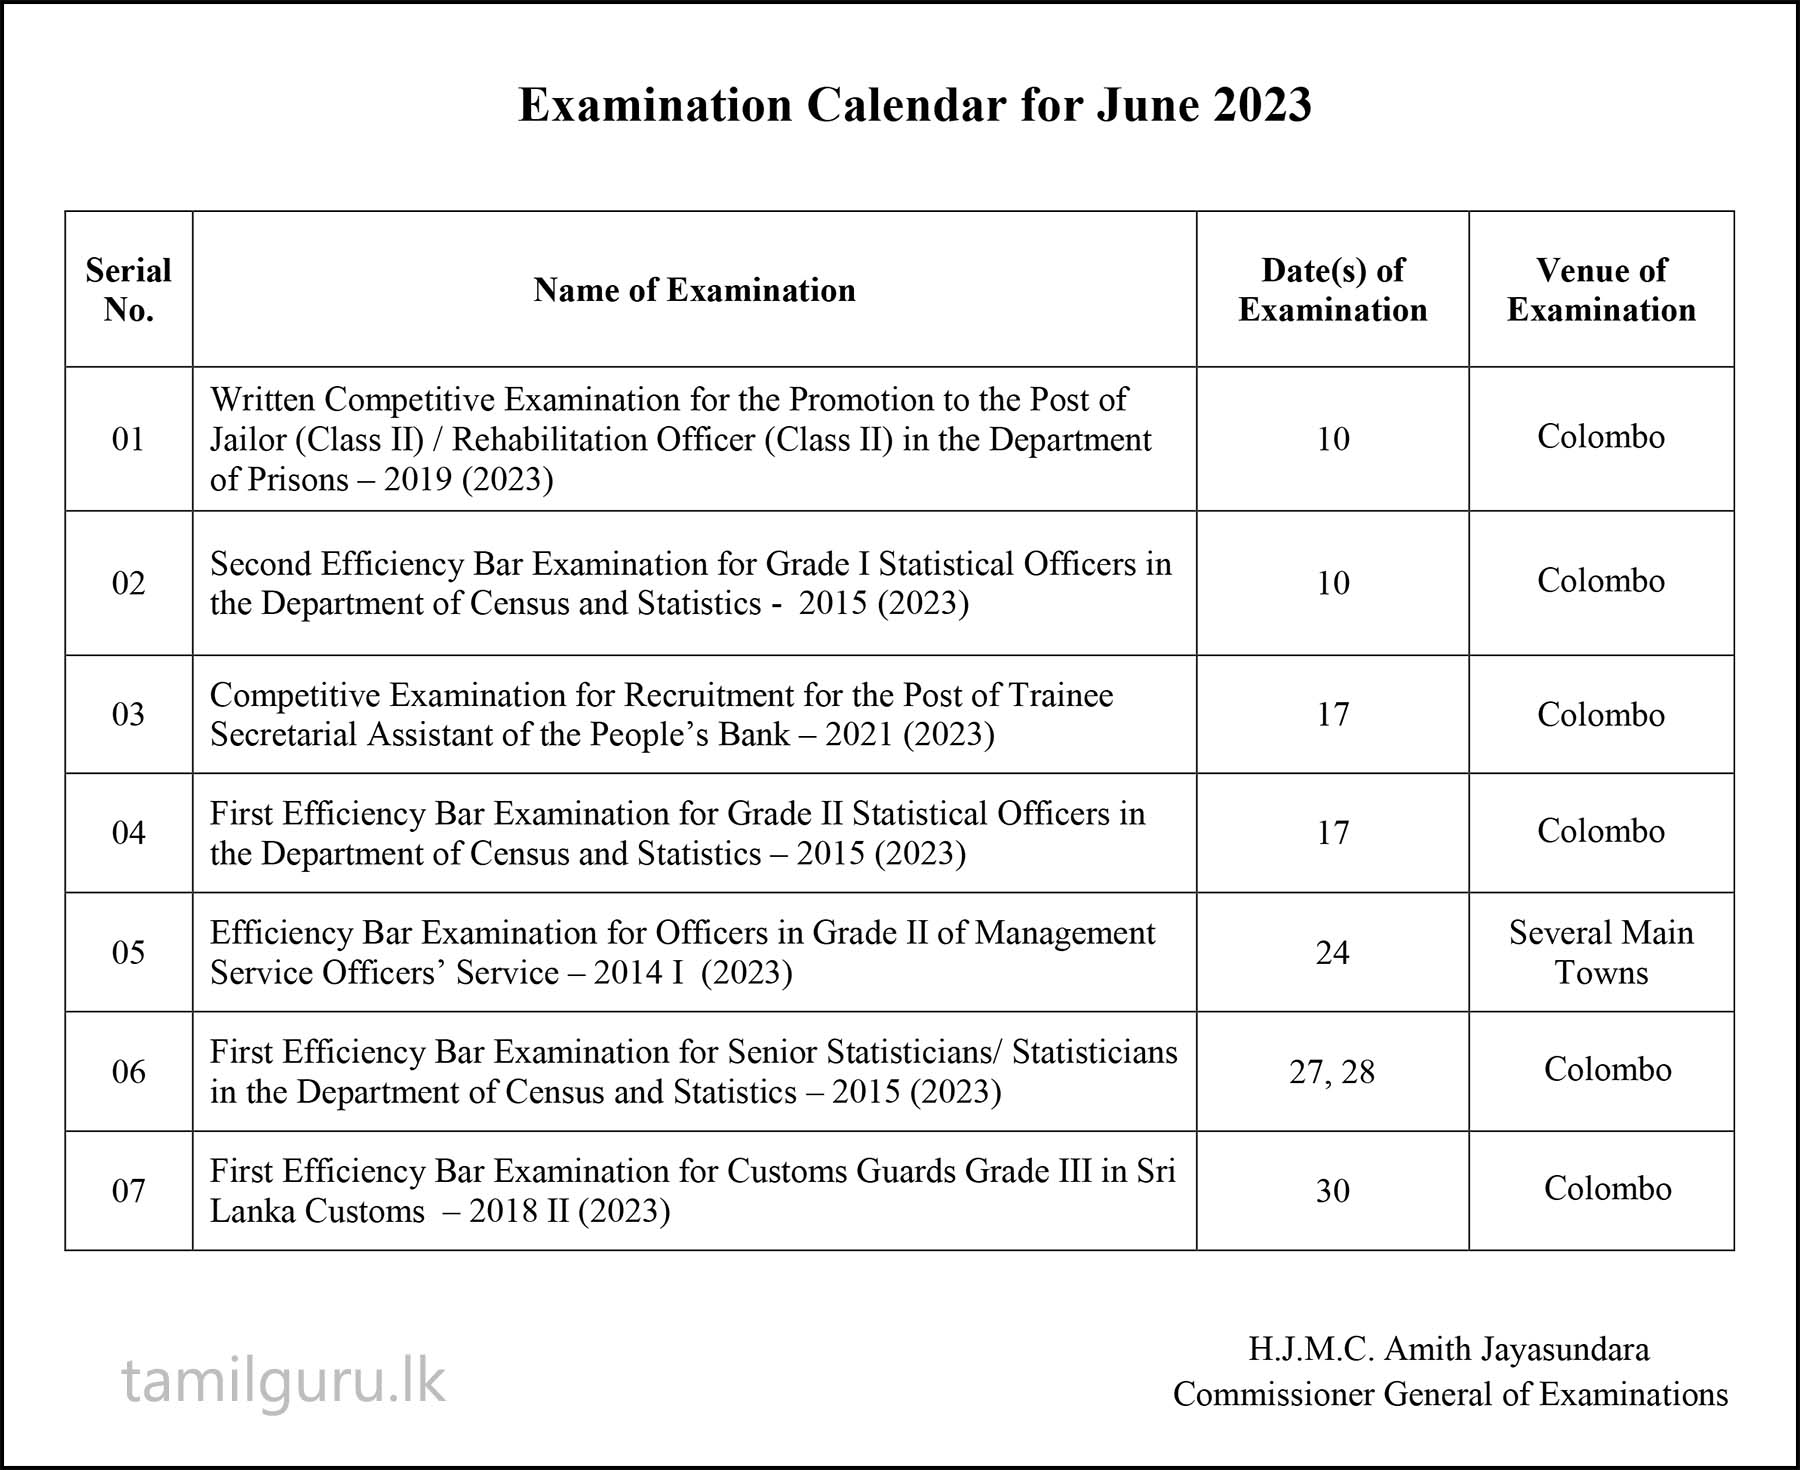 Examination Calendar for June 2023 - Department of Examinations